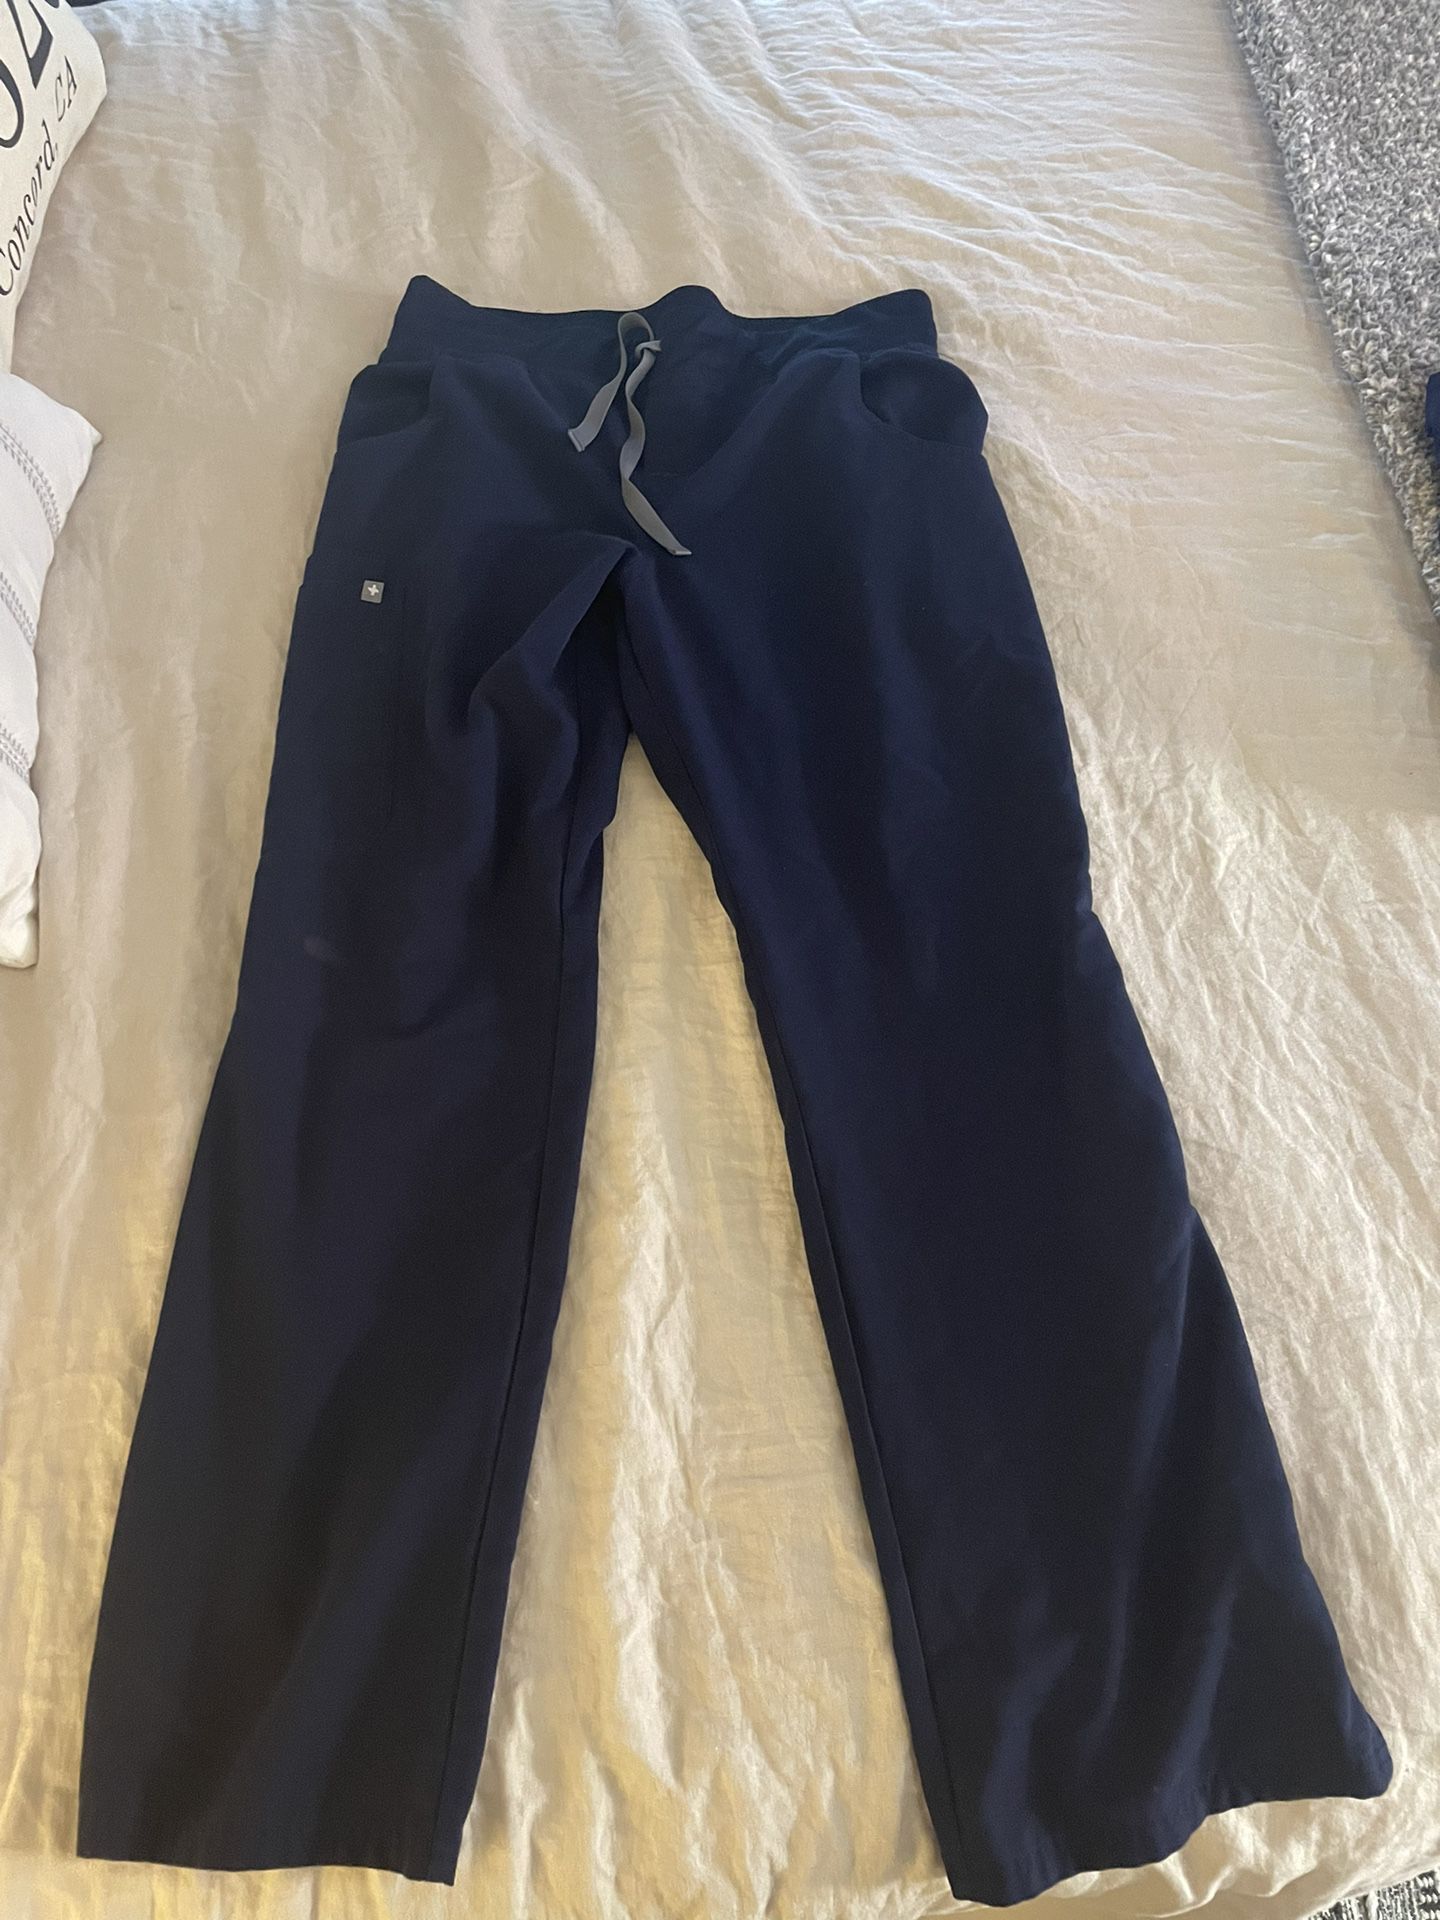 Figs Navy Blue Scrub Pants 